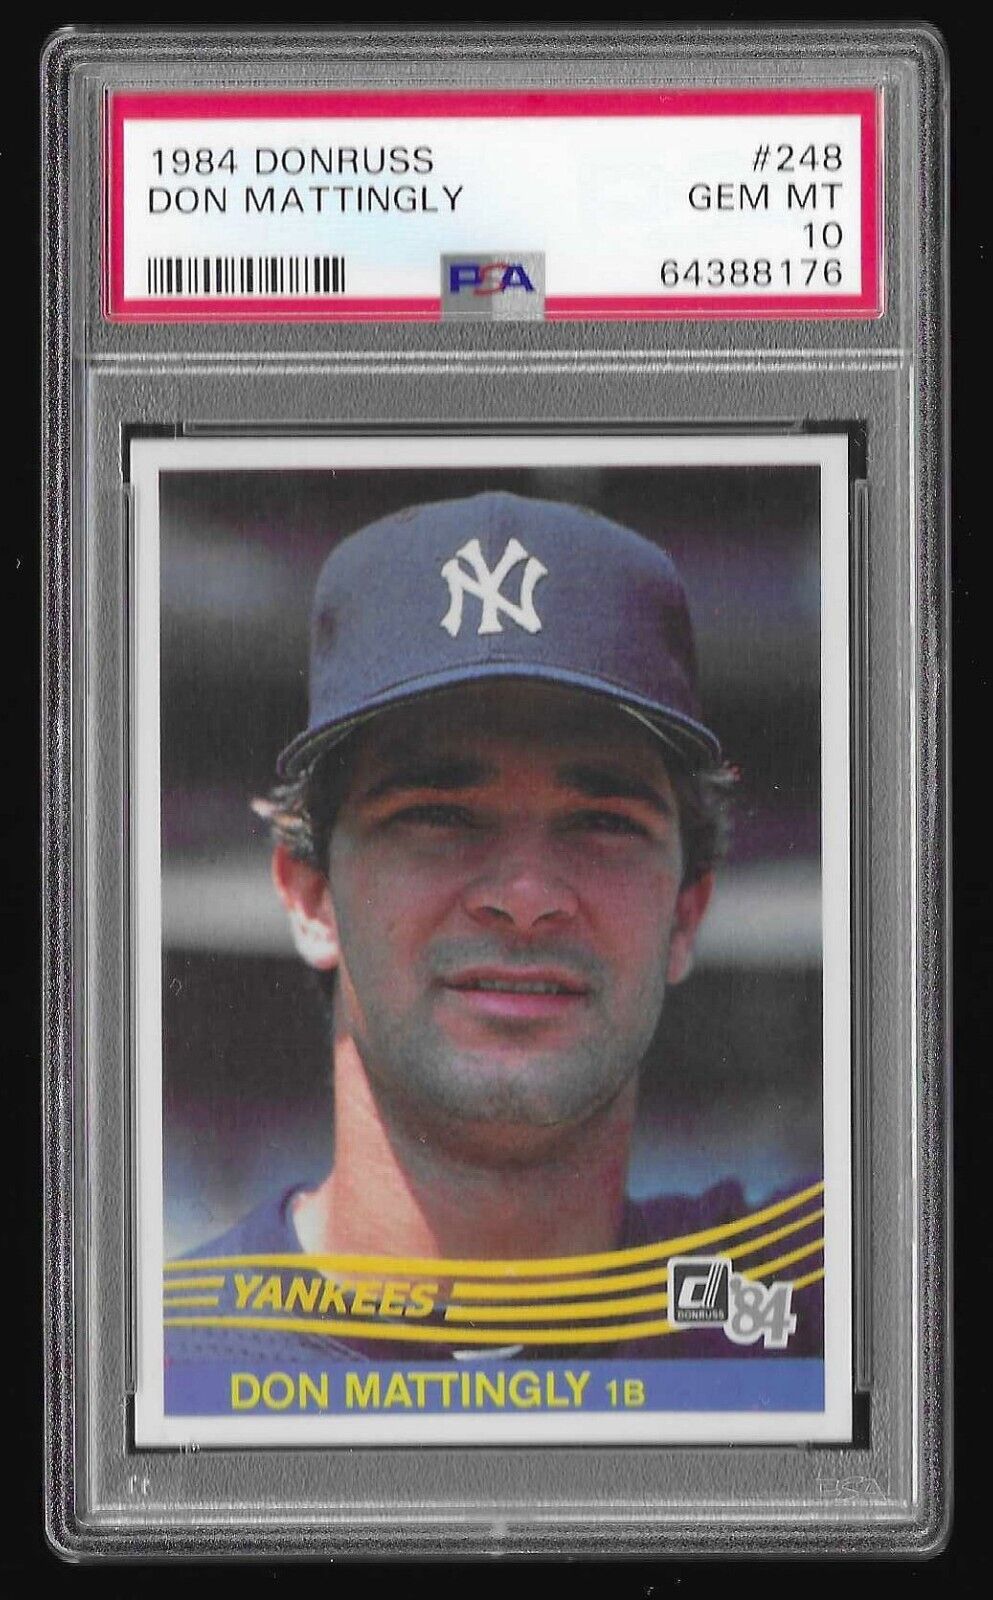 Don Mattingly 1984 Donruss PSA 10 GEM MINT Rookie Card #248 Yankees PSA 10 RC